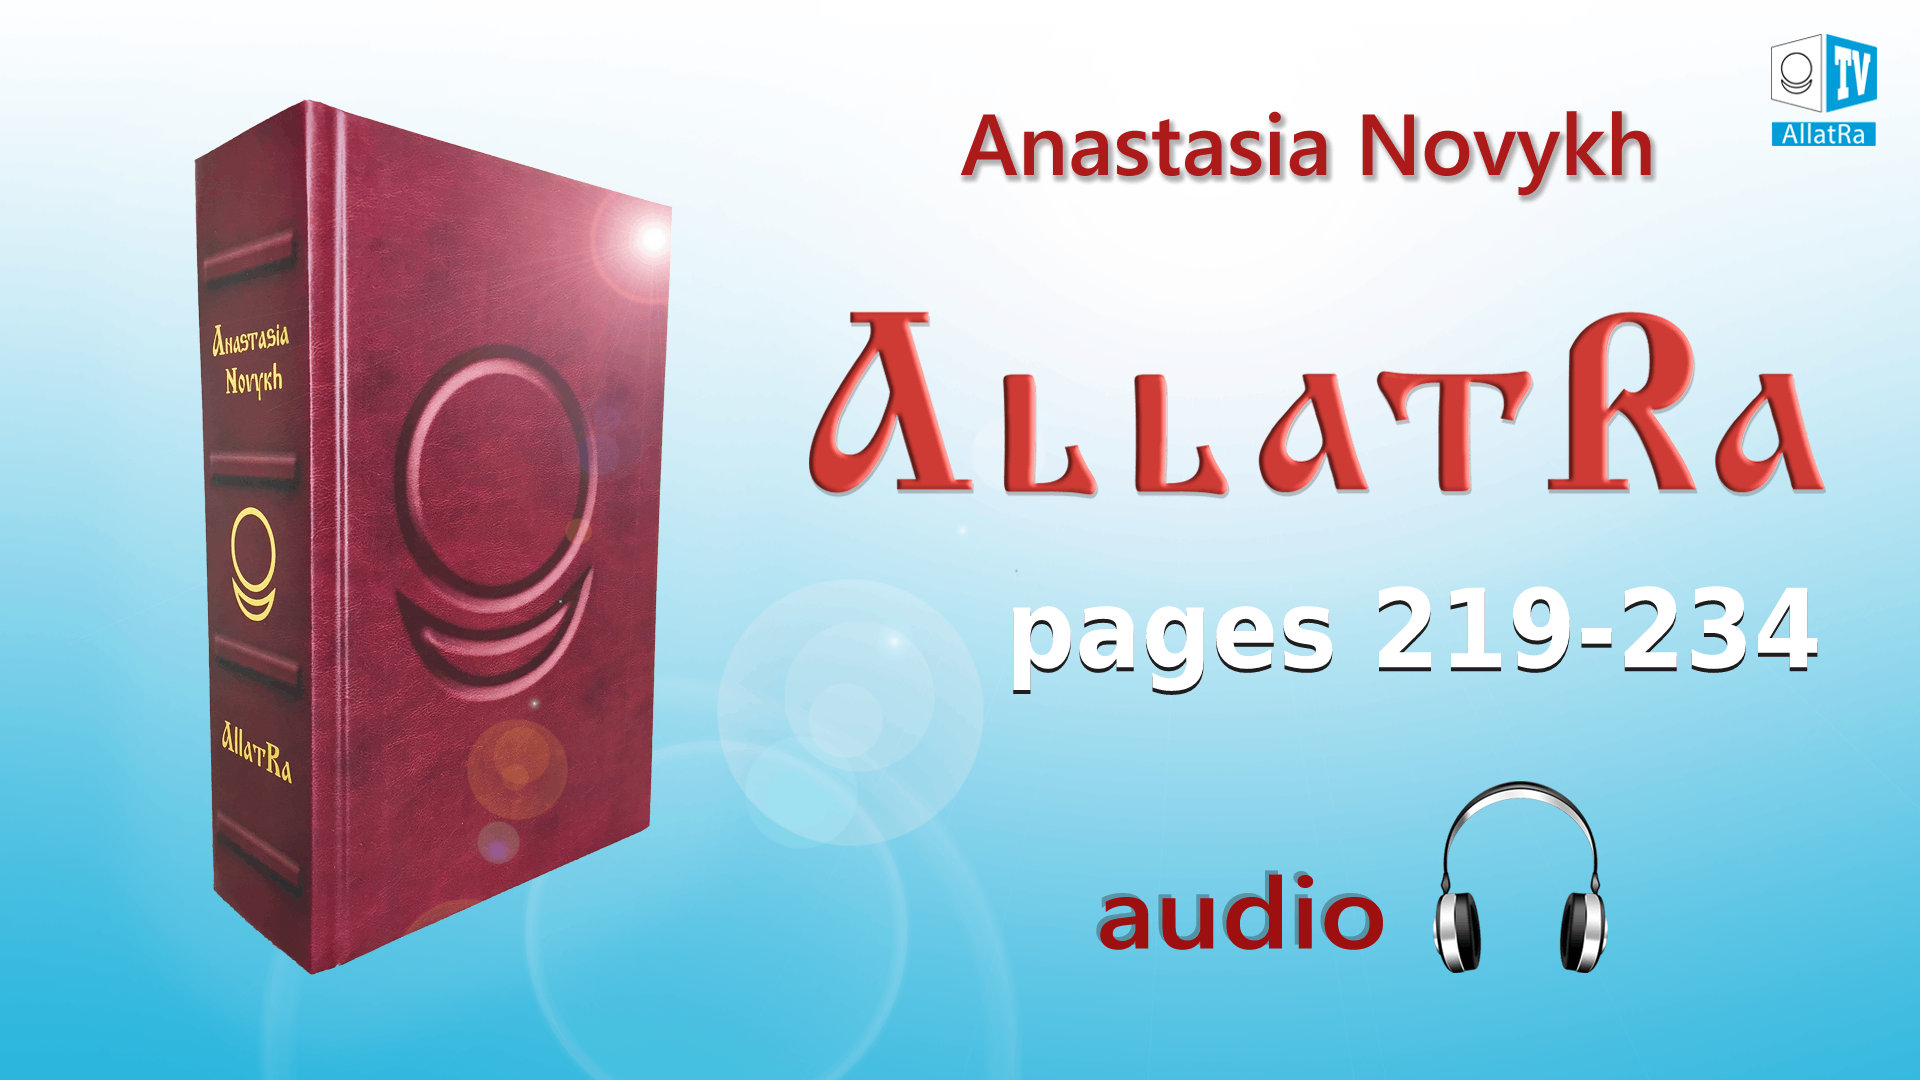 АllatRa. Anastasia Novykh. Audiobook. Pages 219-234